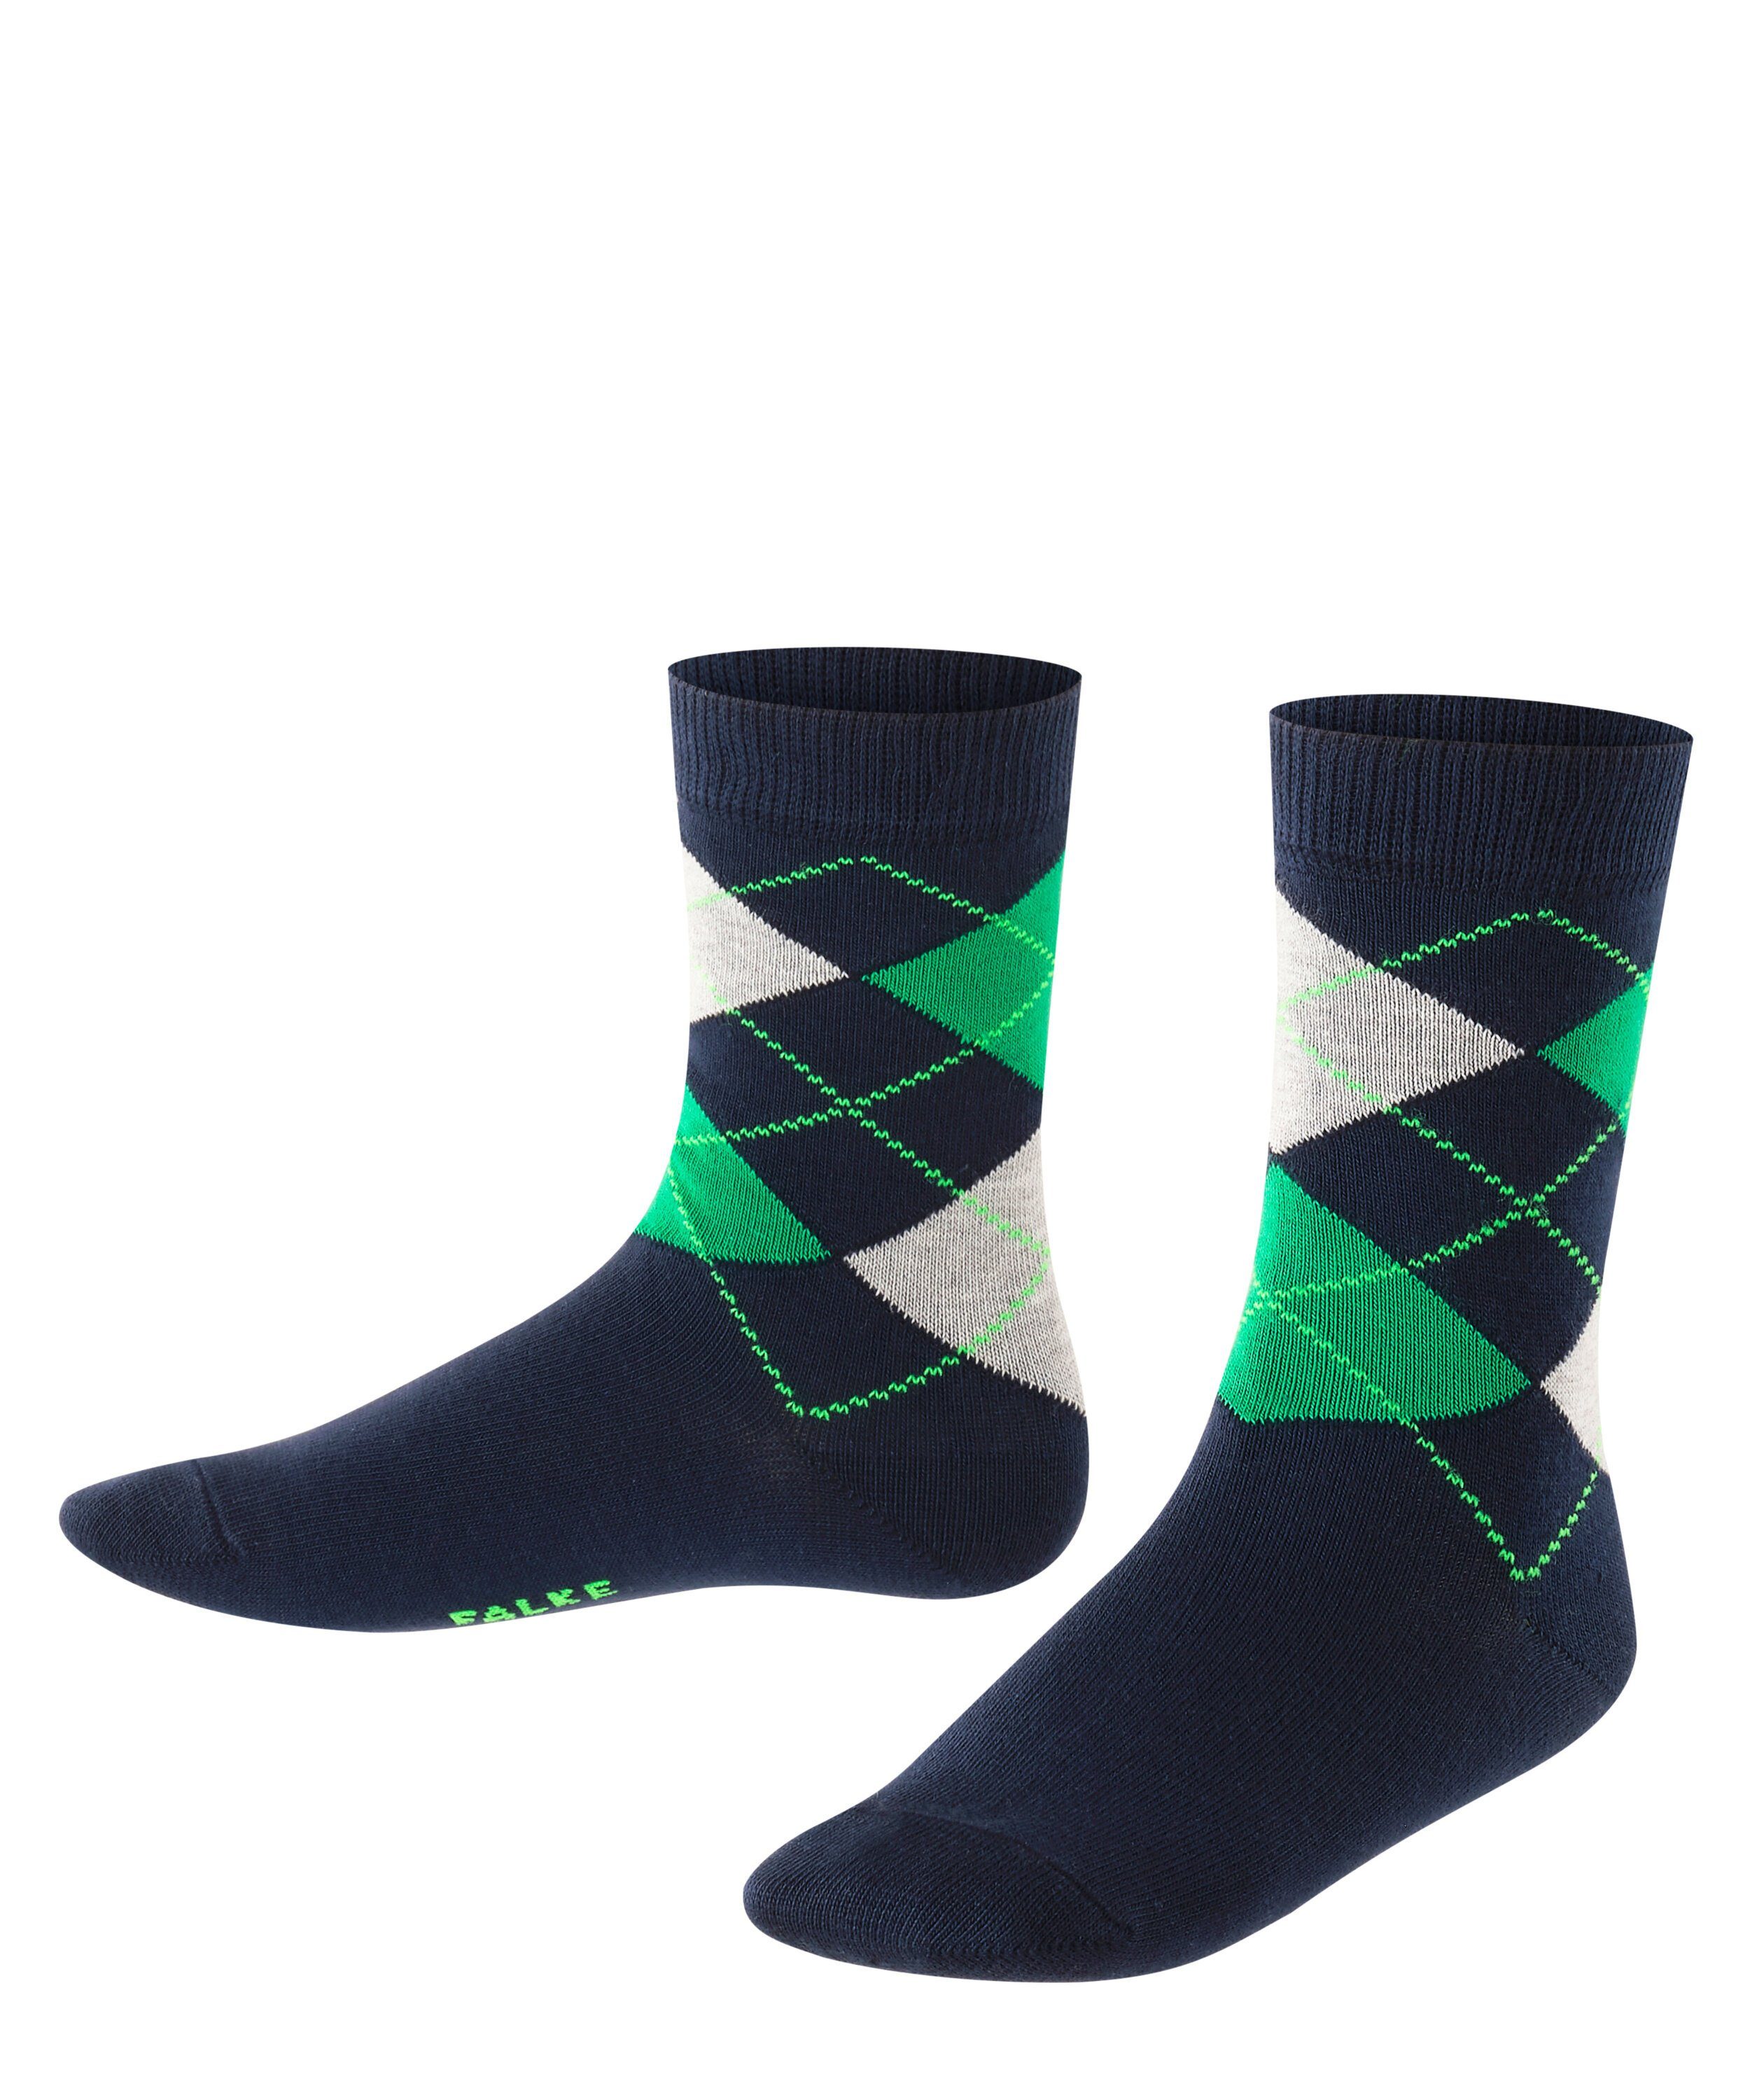 Wäsche/Bademode Socken FALKE Socken Classic Argyle (1-Paar) mit verstärkten Belastungszonen